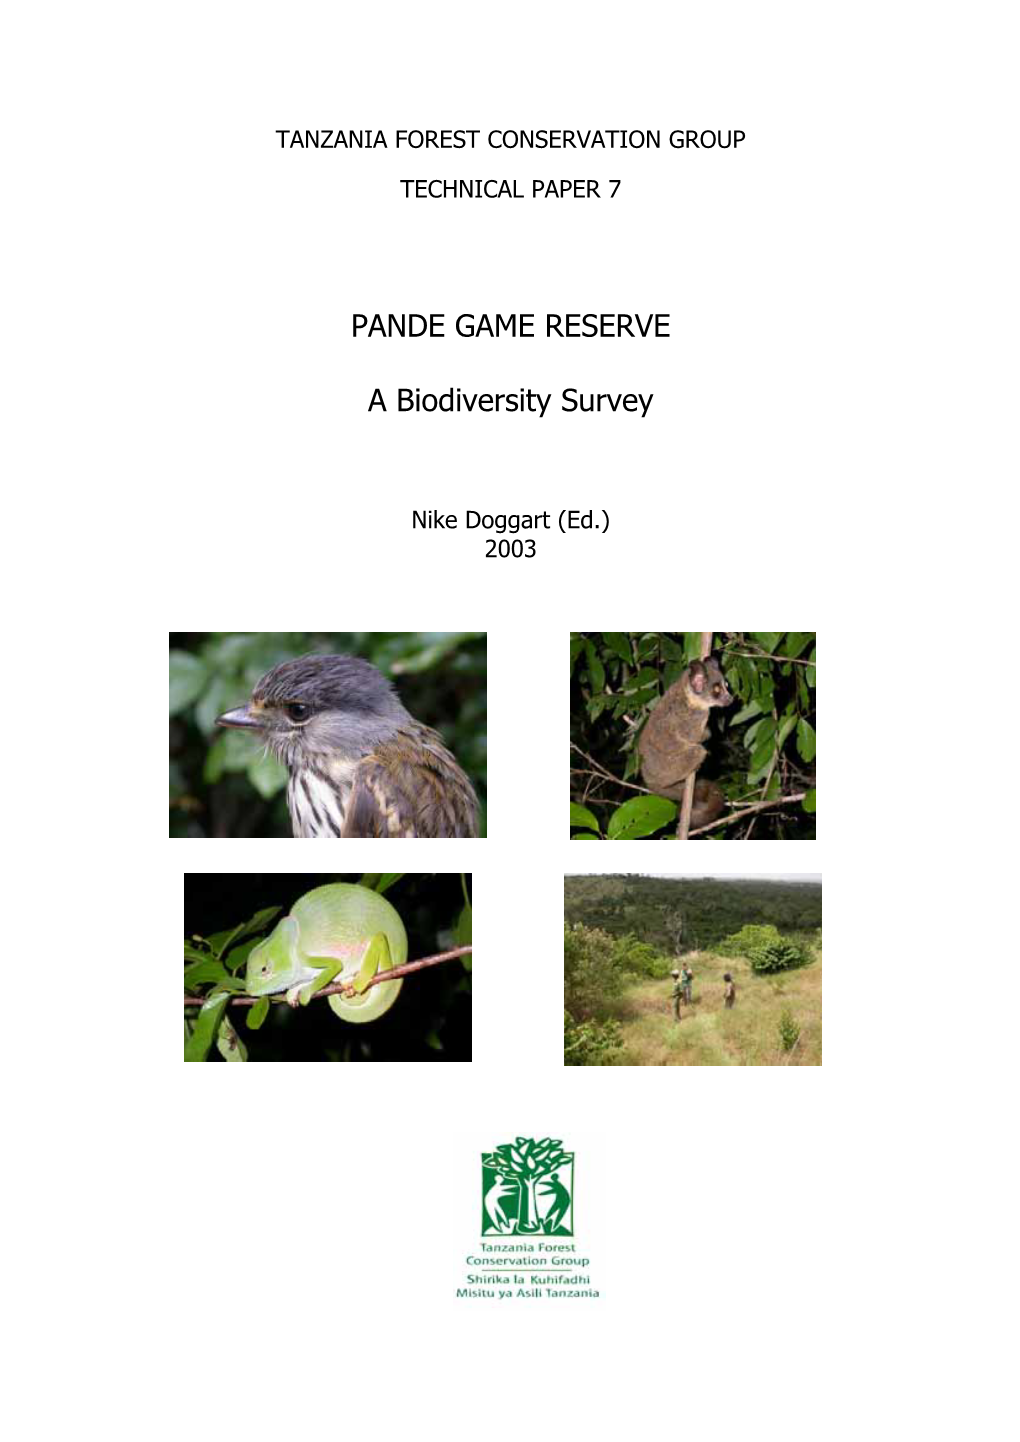 PANDE GAME RESERVE a Biodiversity Survey